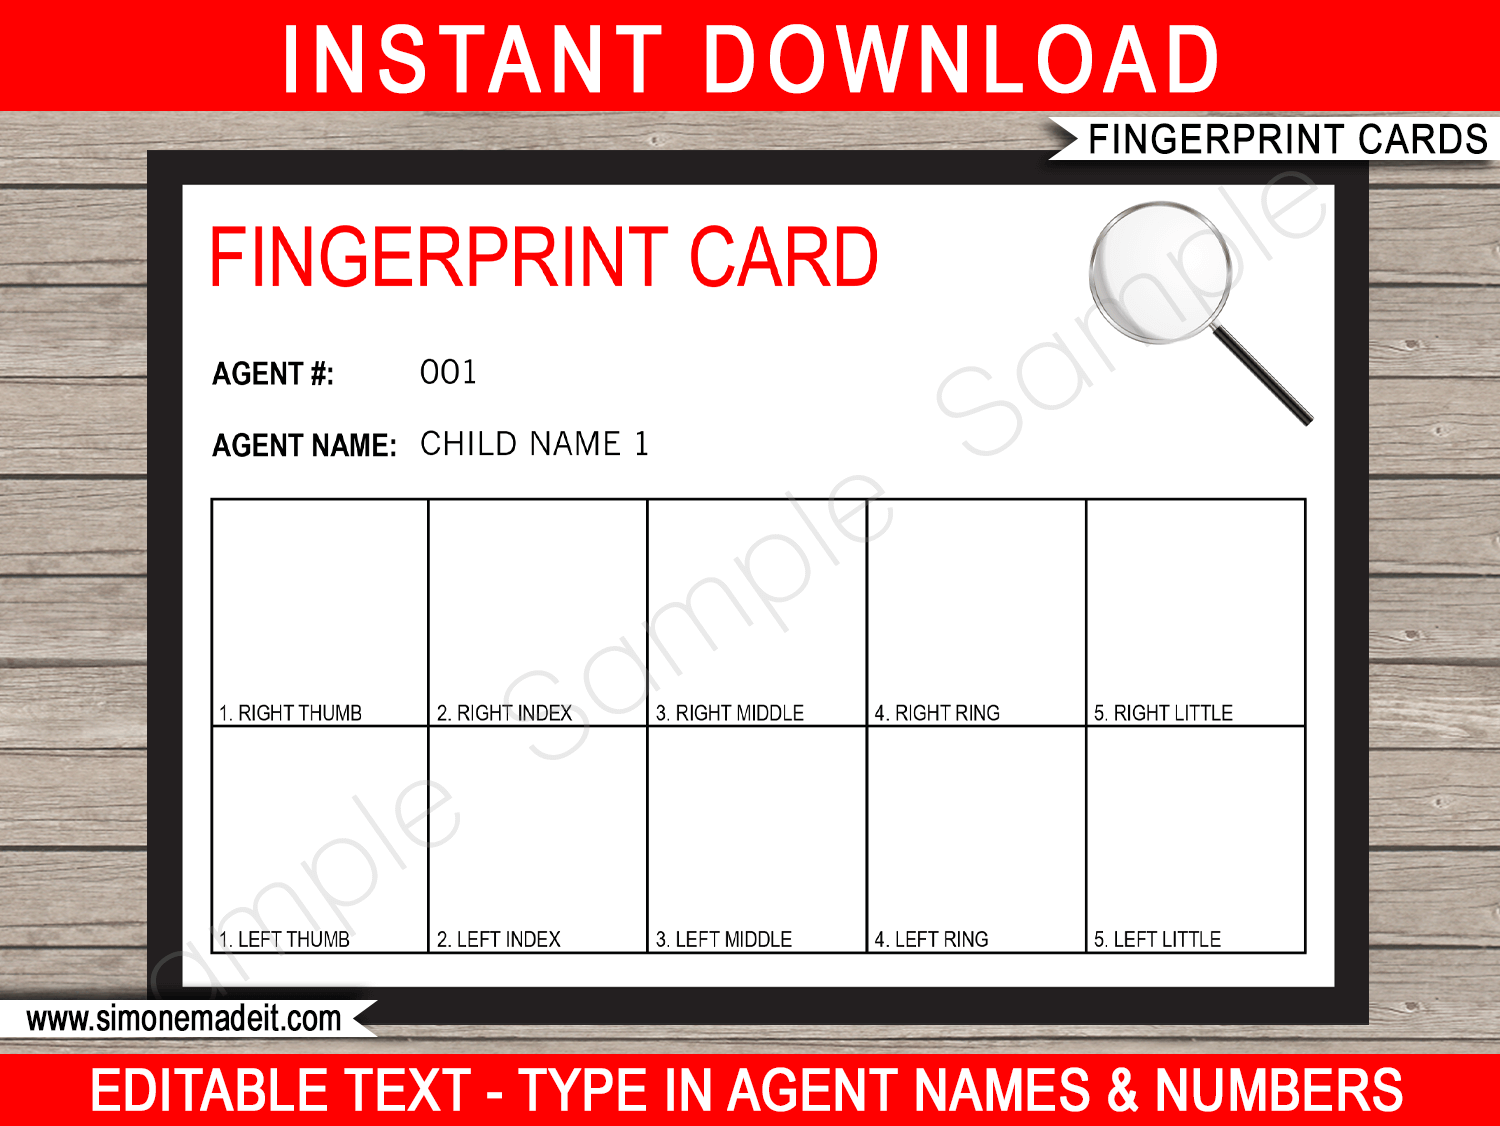 Spy Party Fingerprinting Card Template | Printable Secret Agent Fingerprint | Birthday Party Favors | DIY Editable Text | INSTANT DOWNLOAD $3.00 via SIMONEmadeit.com